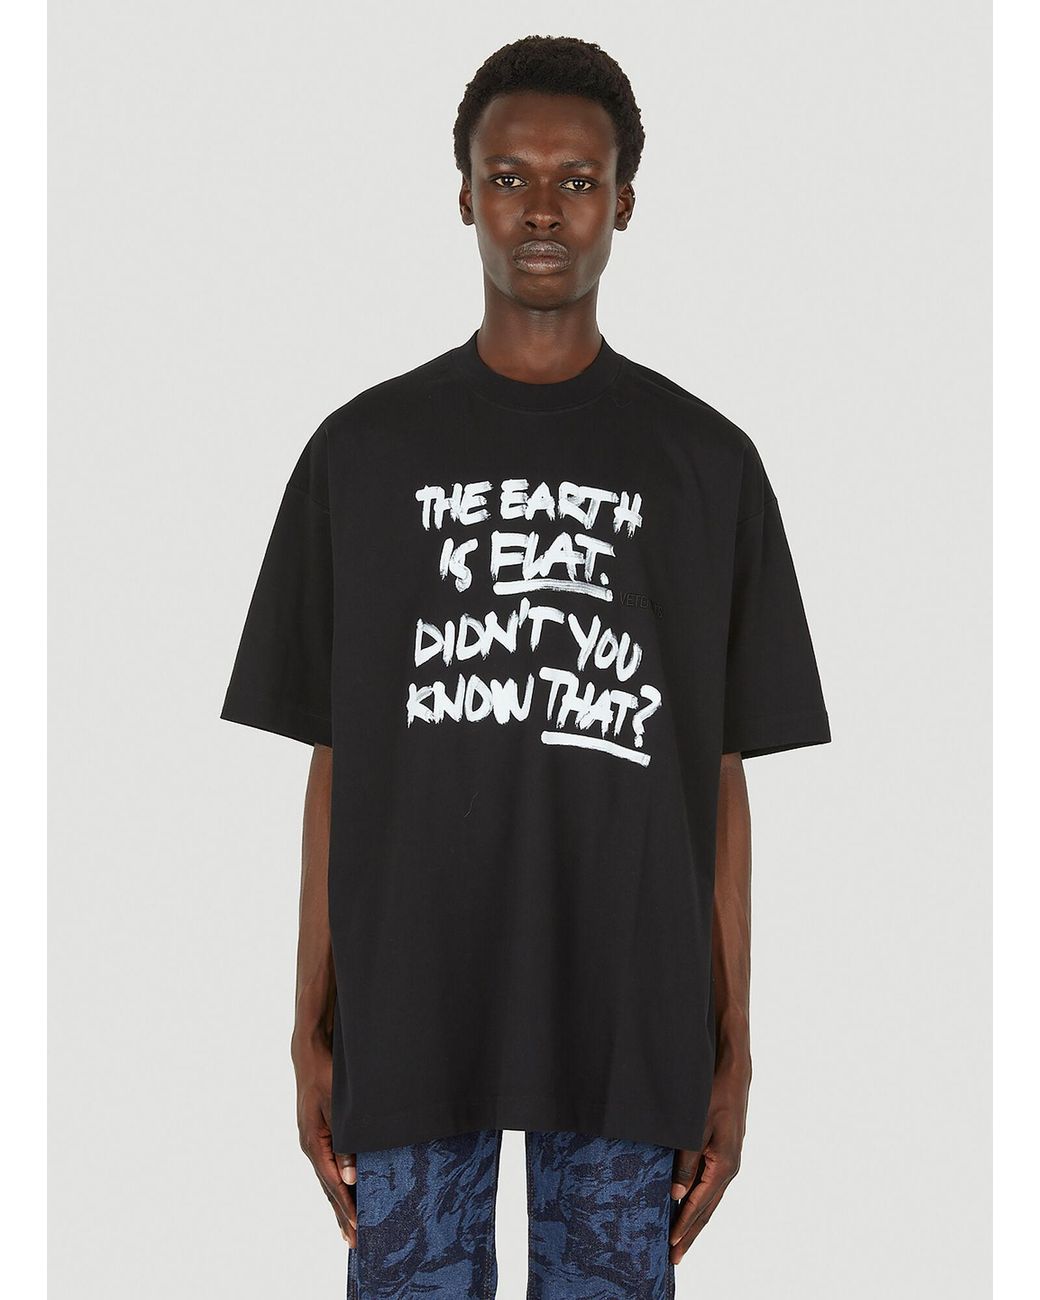 Vetements Flat Earth T-shirt in Black for Men | Lyst